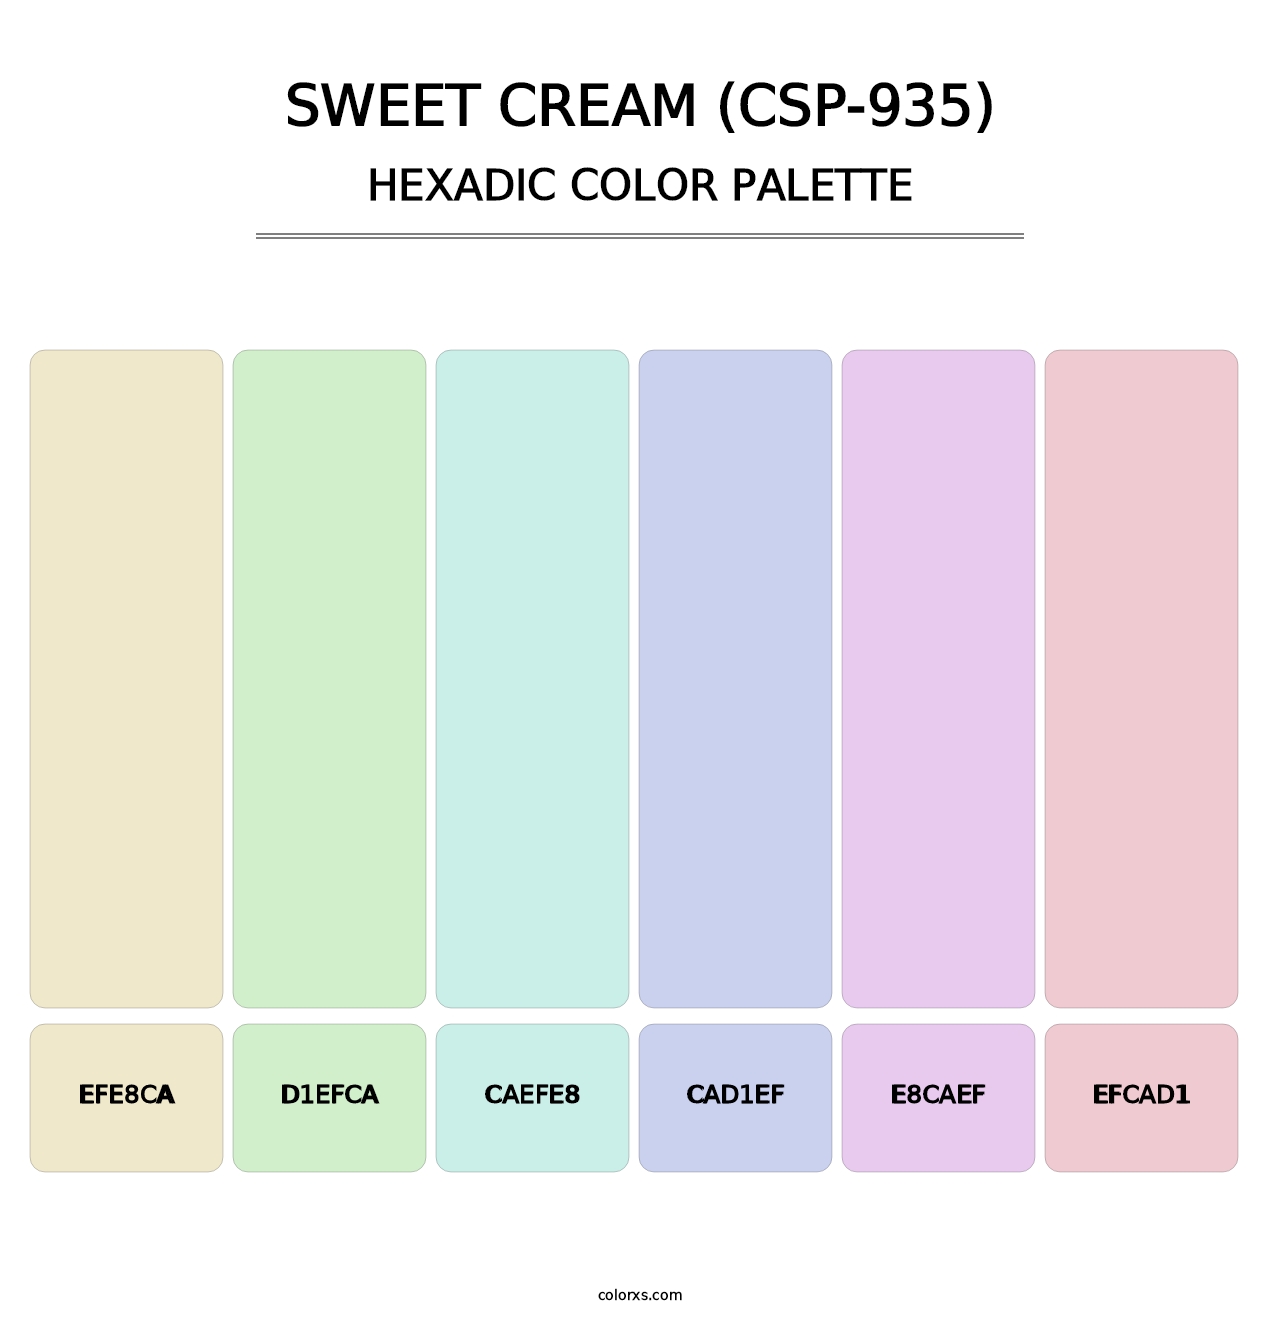 Sweet Cream (CSP-935) - Hexadic Color Palette